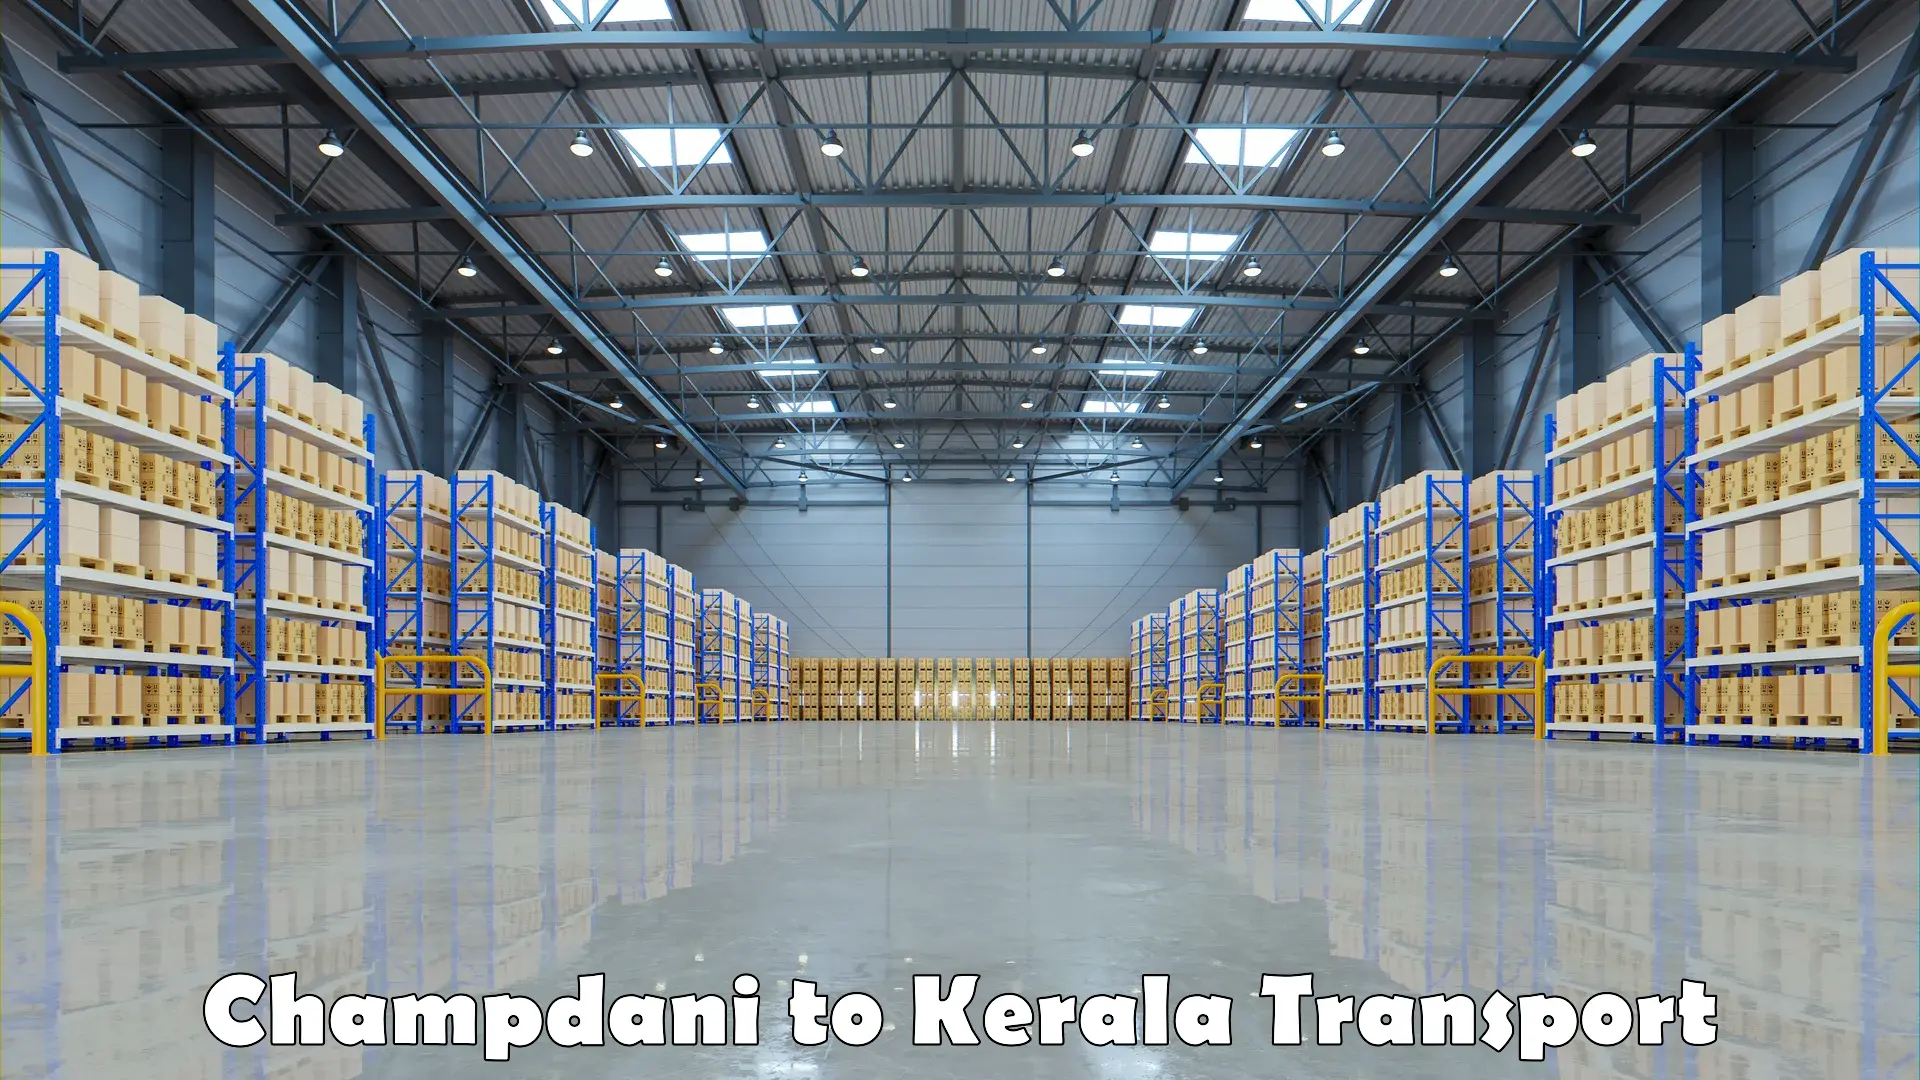 Delivery service Champdani to Kerala